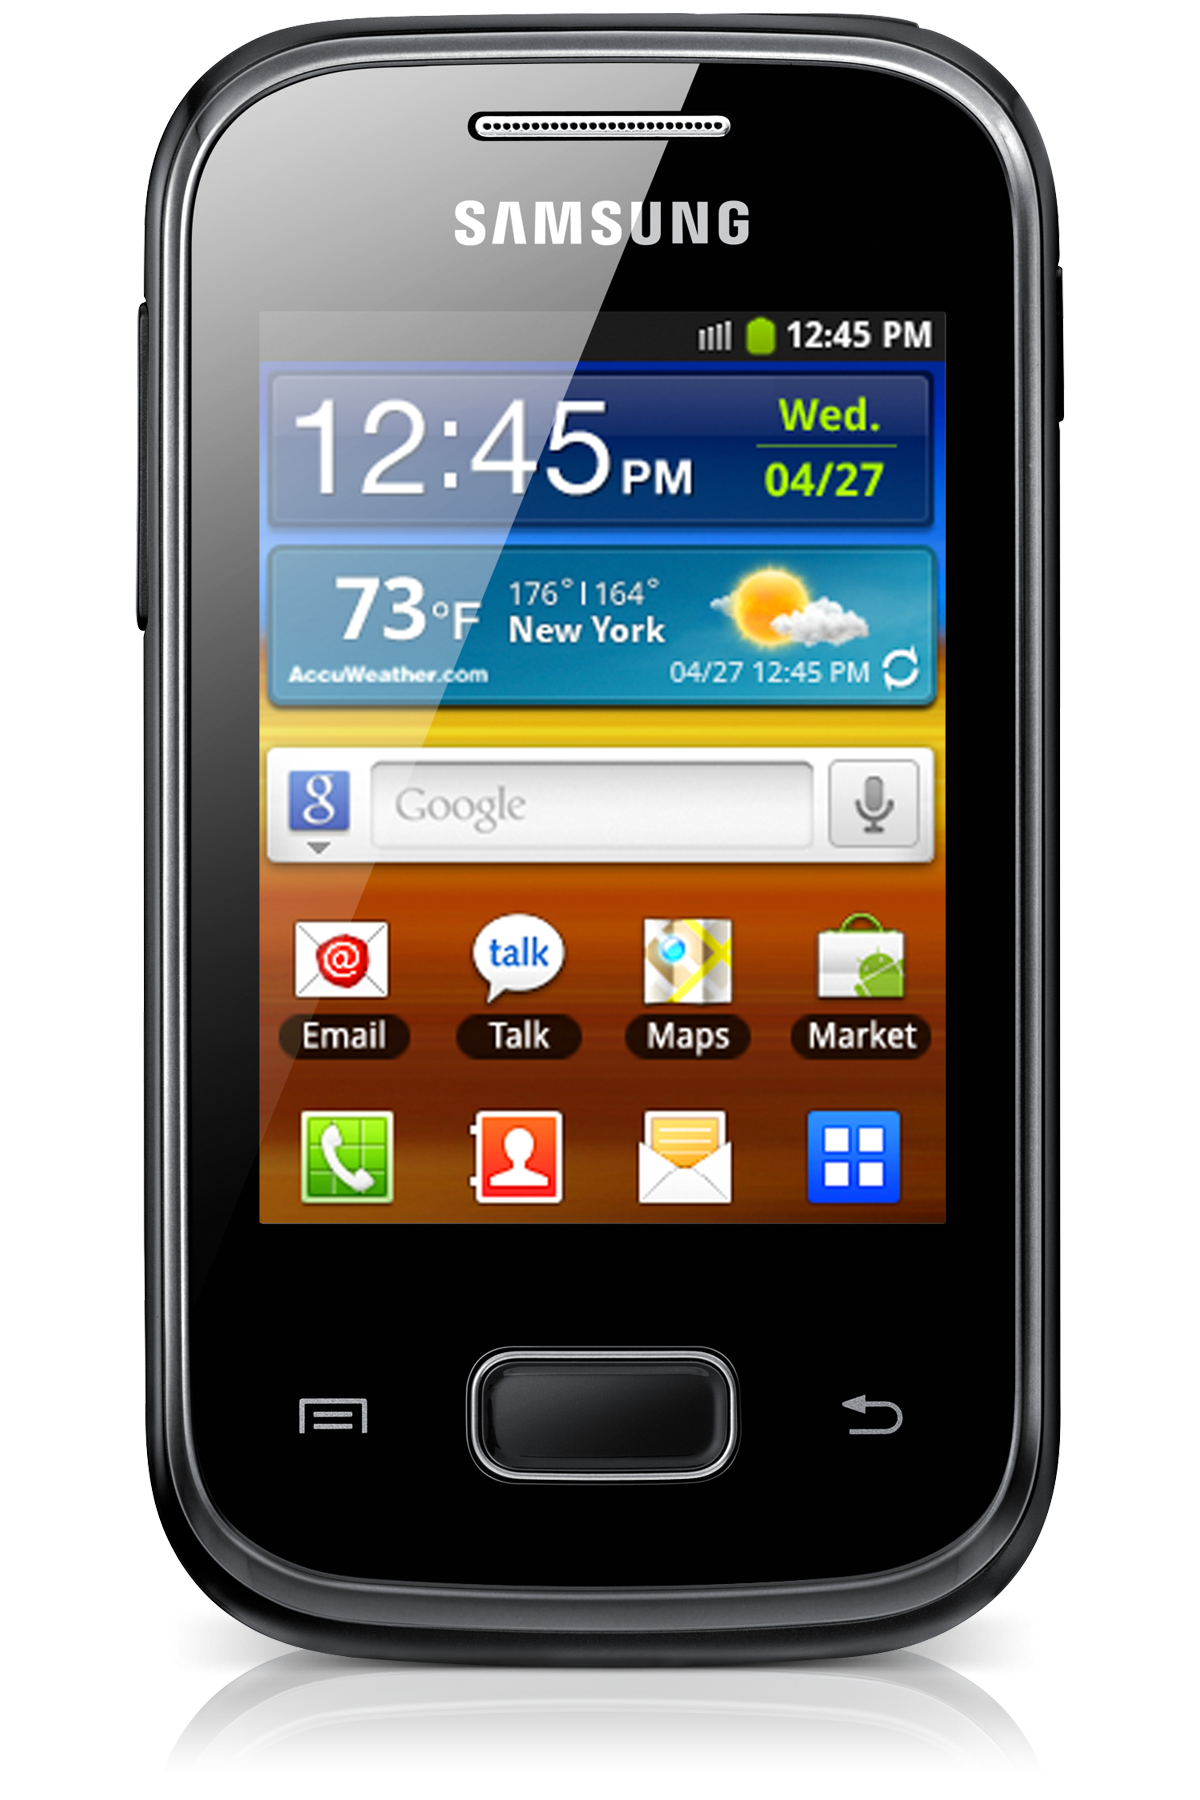 Galaxy Pocket
S5300 Android